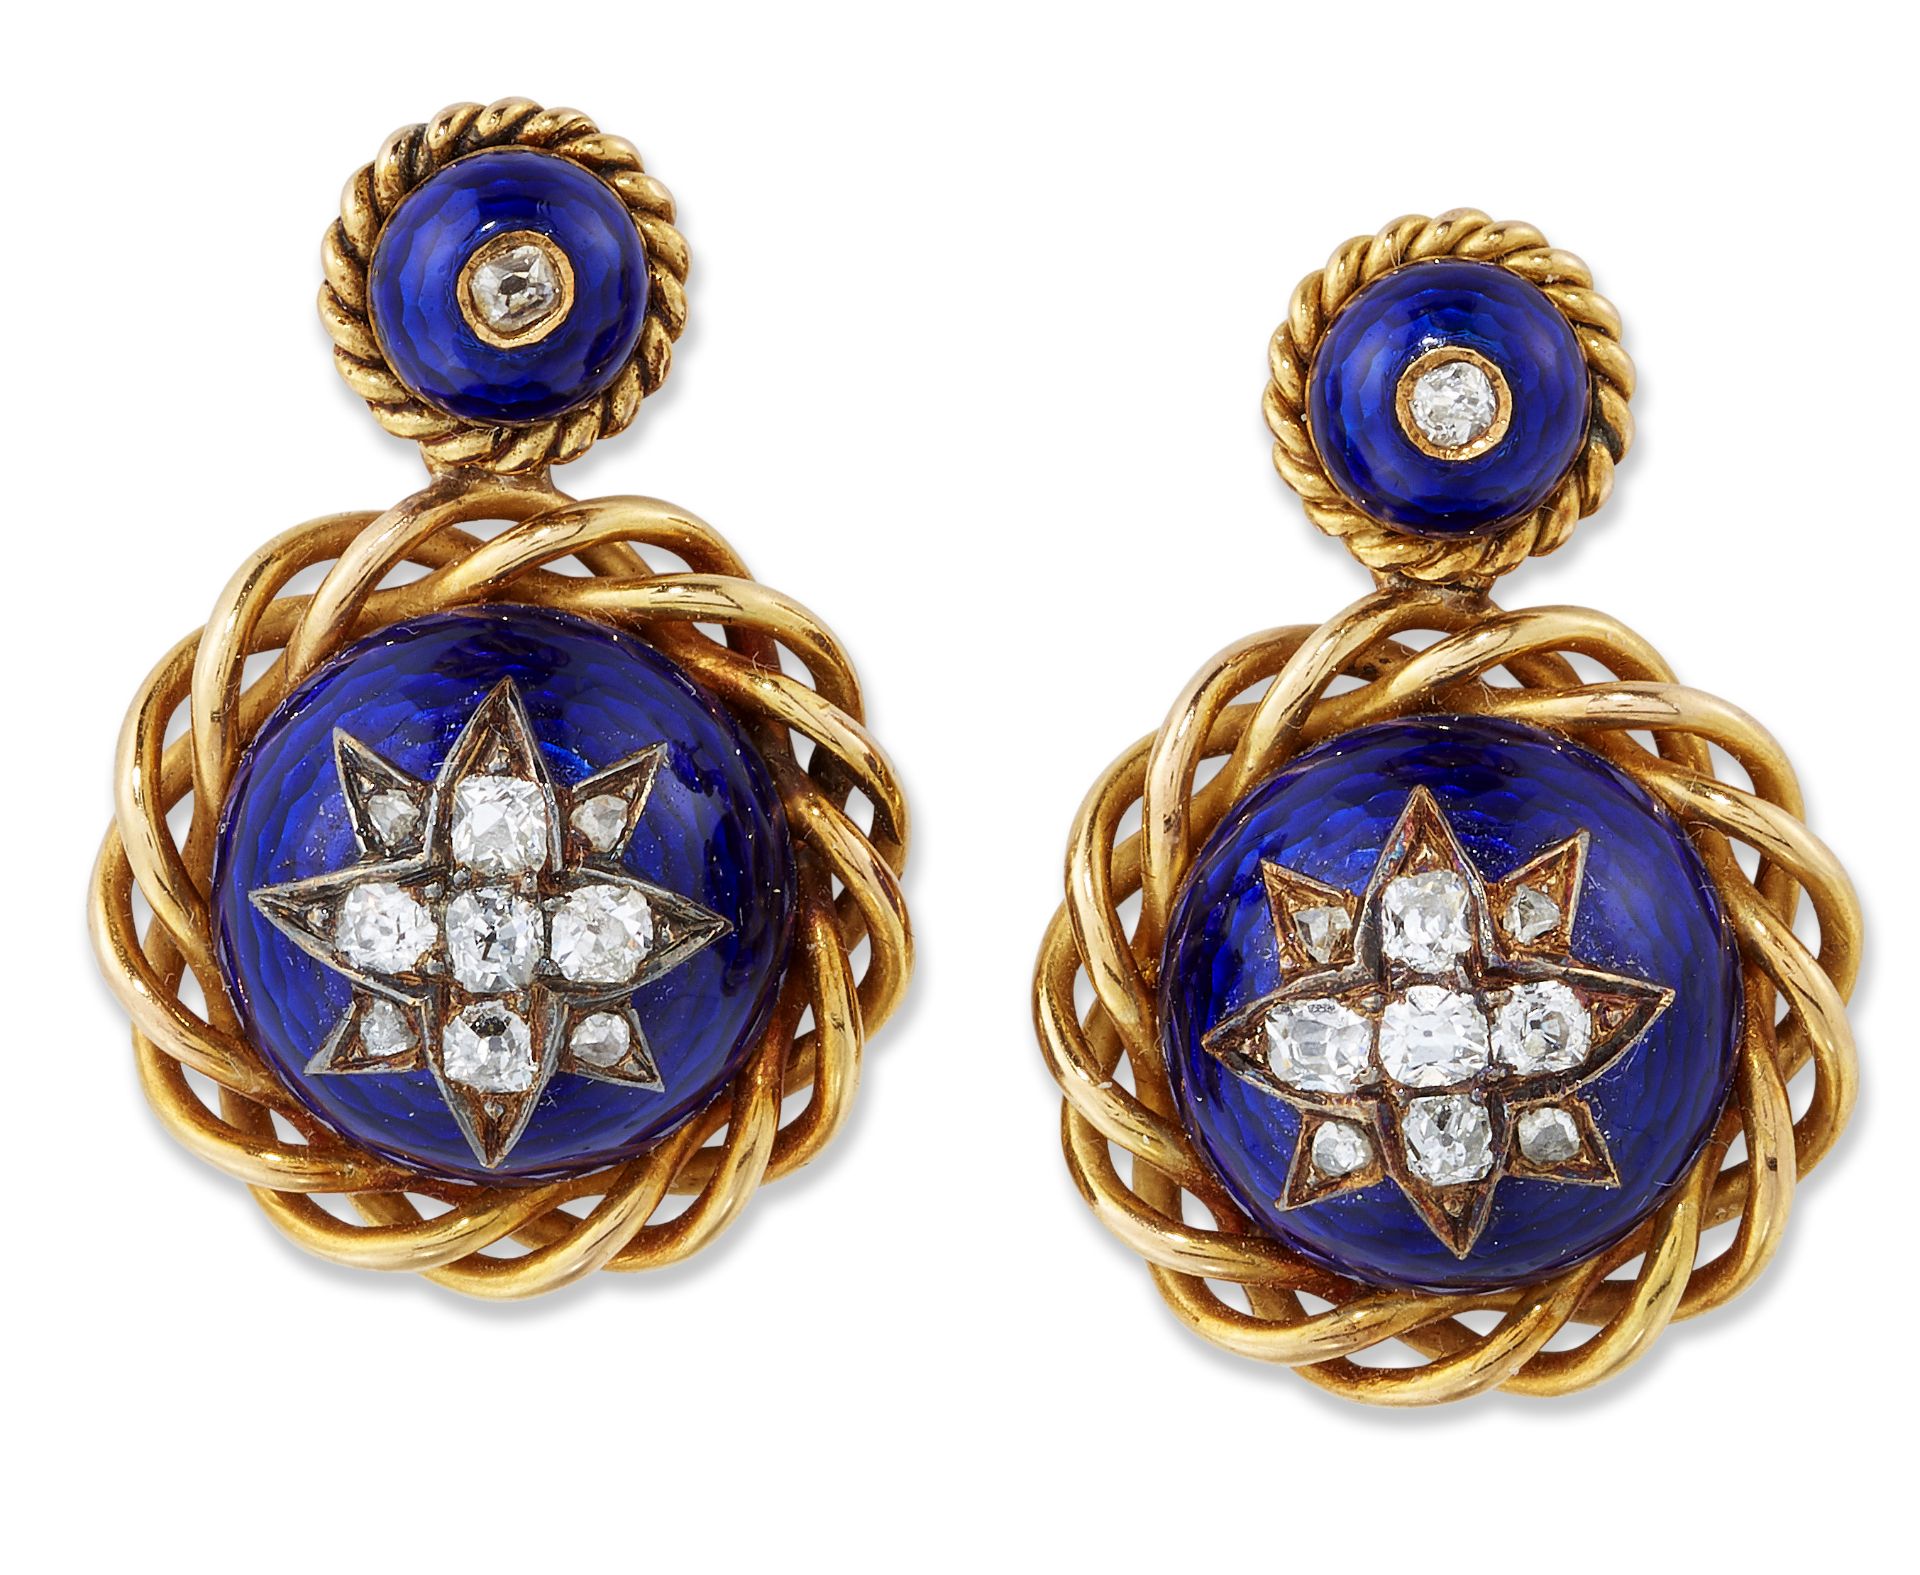 A PAIR OF 19TH CENTURY DIAMOND AND BLUE ENAMEL PENDANT EARRINGS